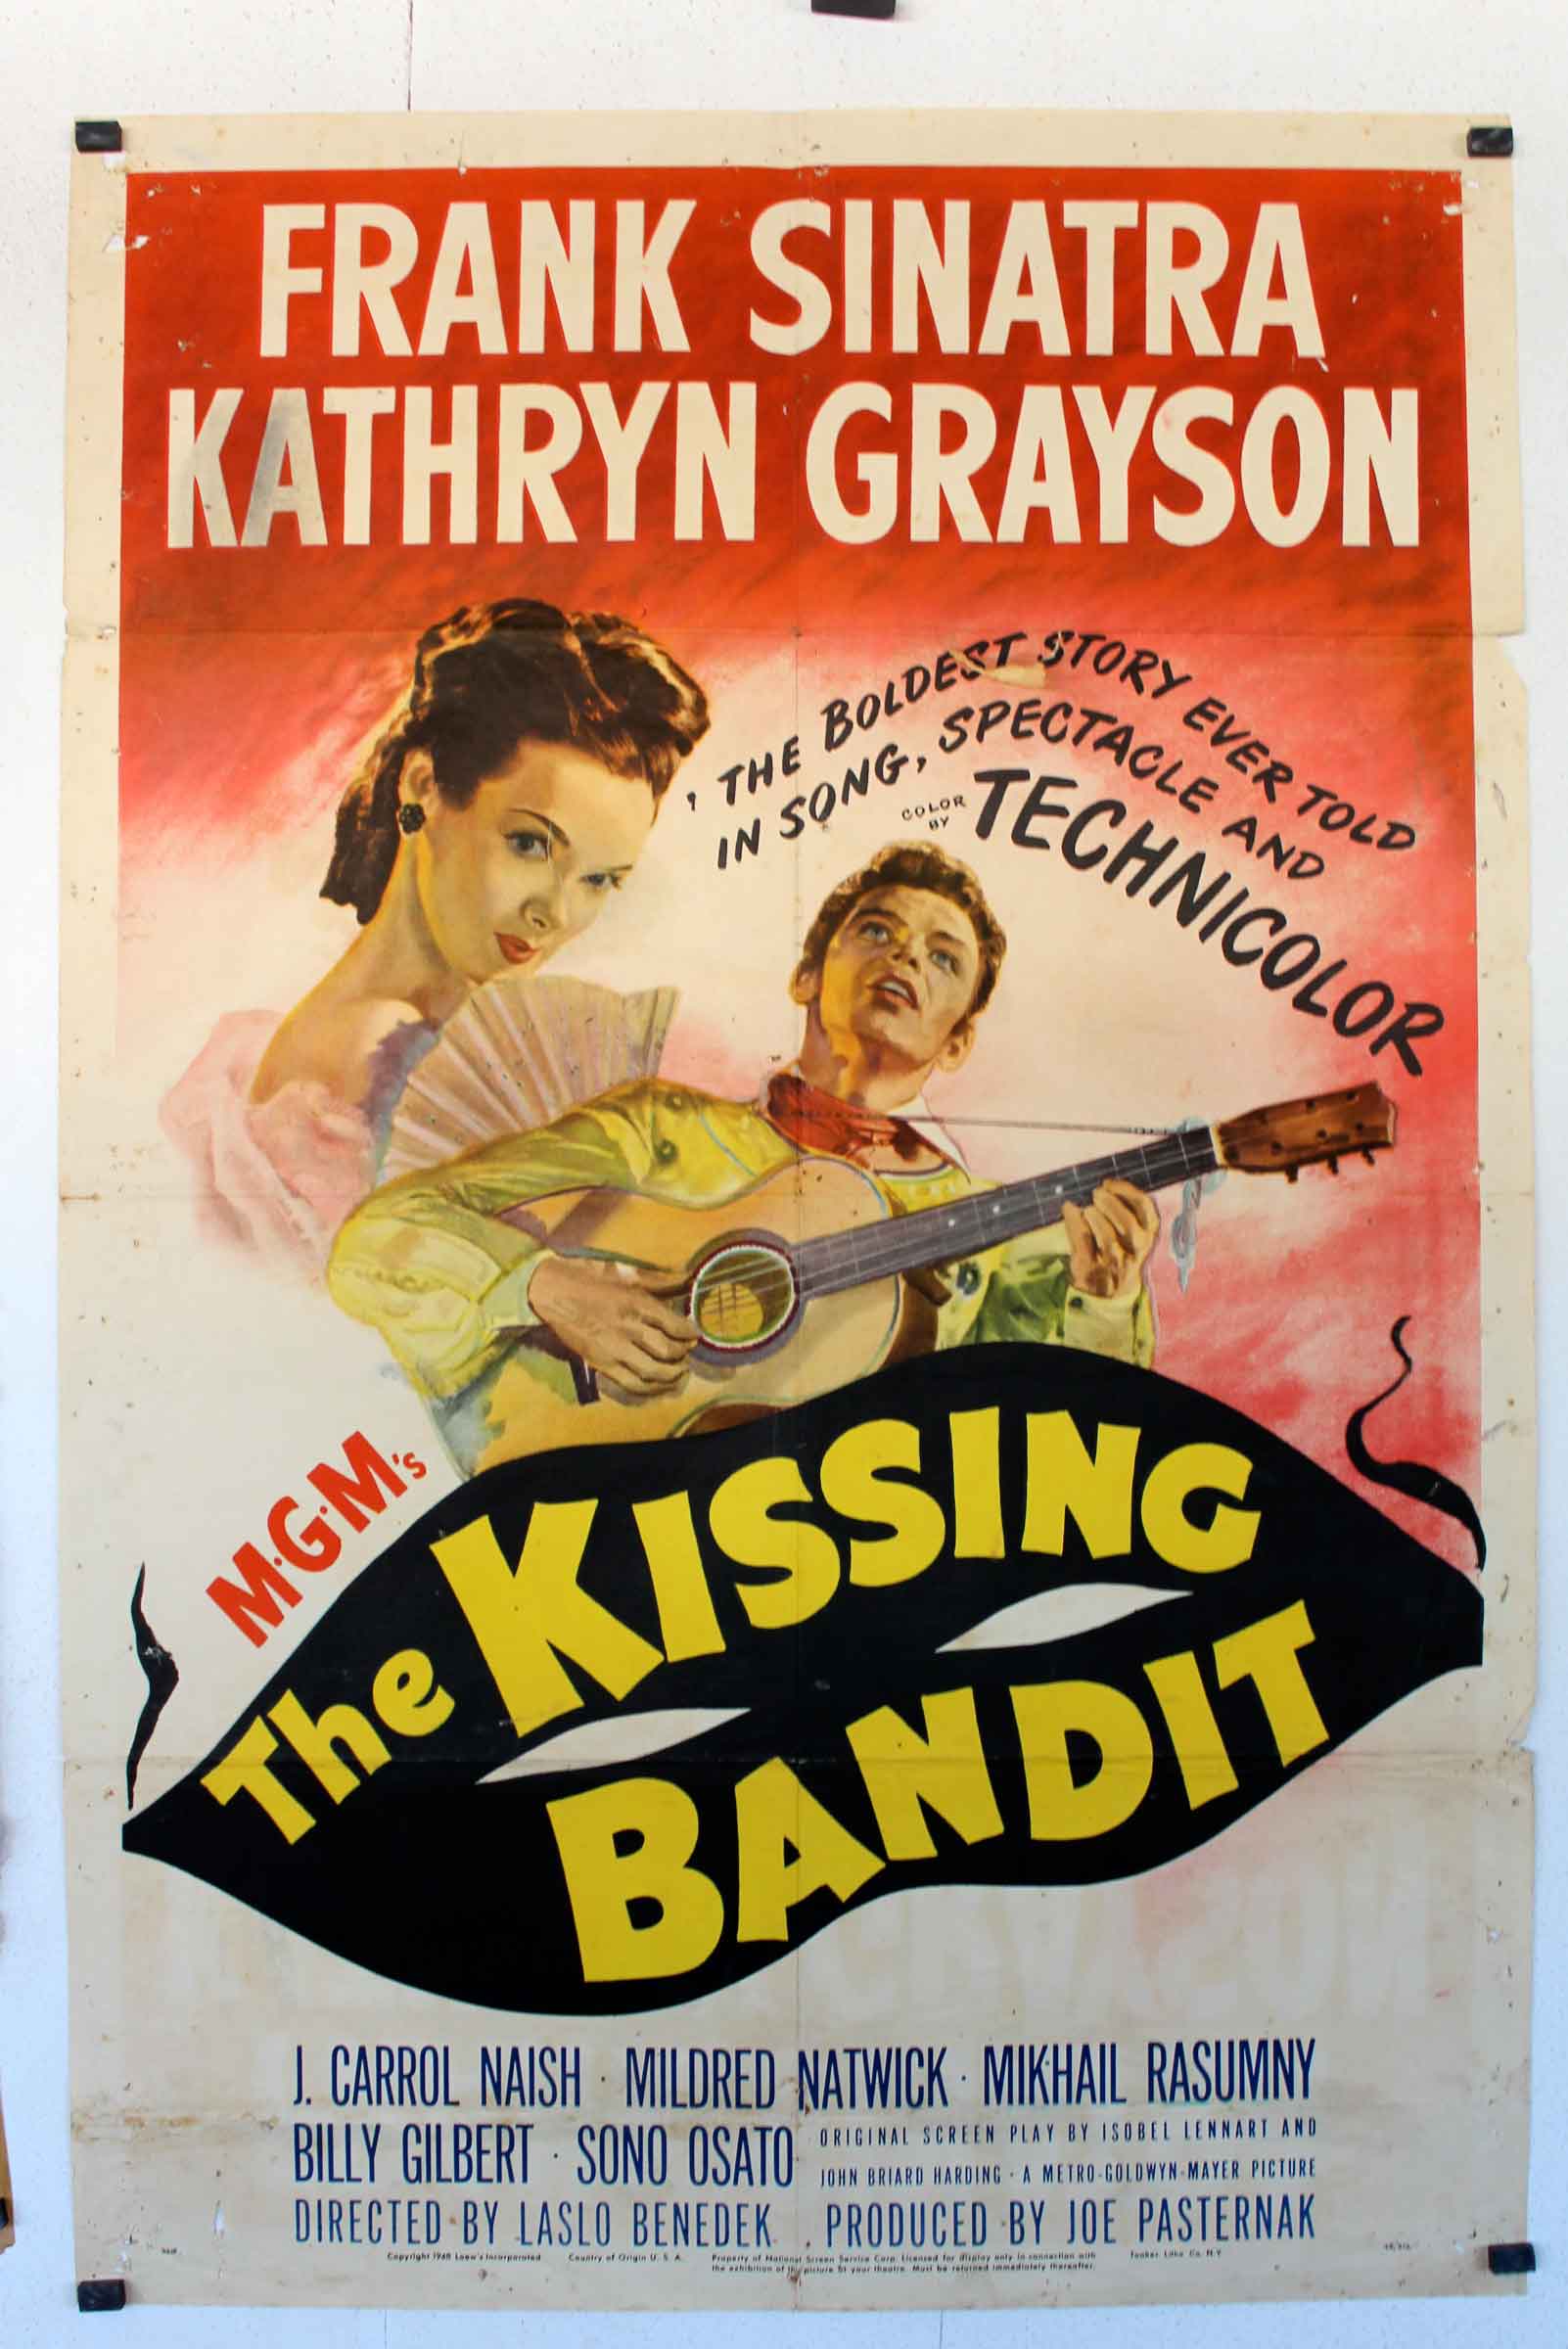 THE KISSING BANDIT